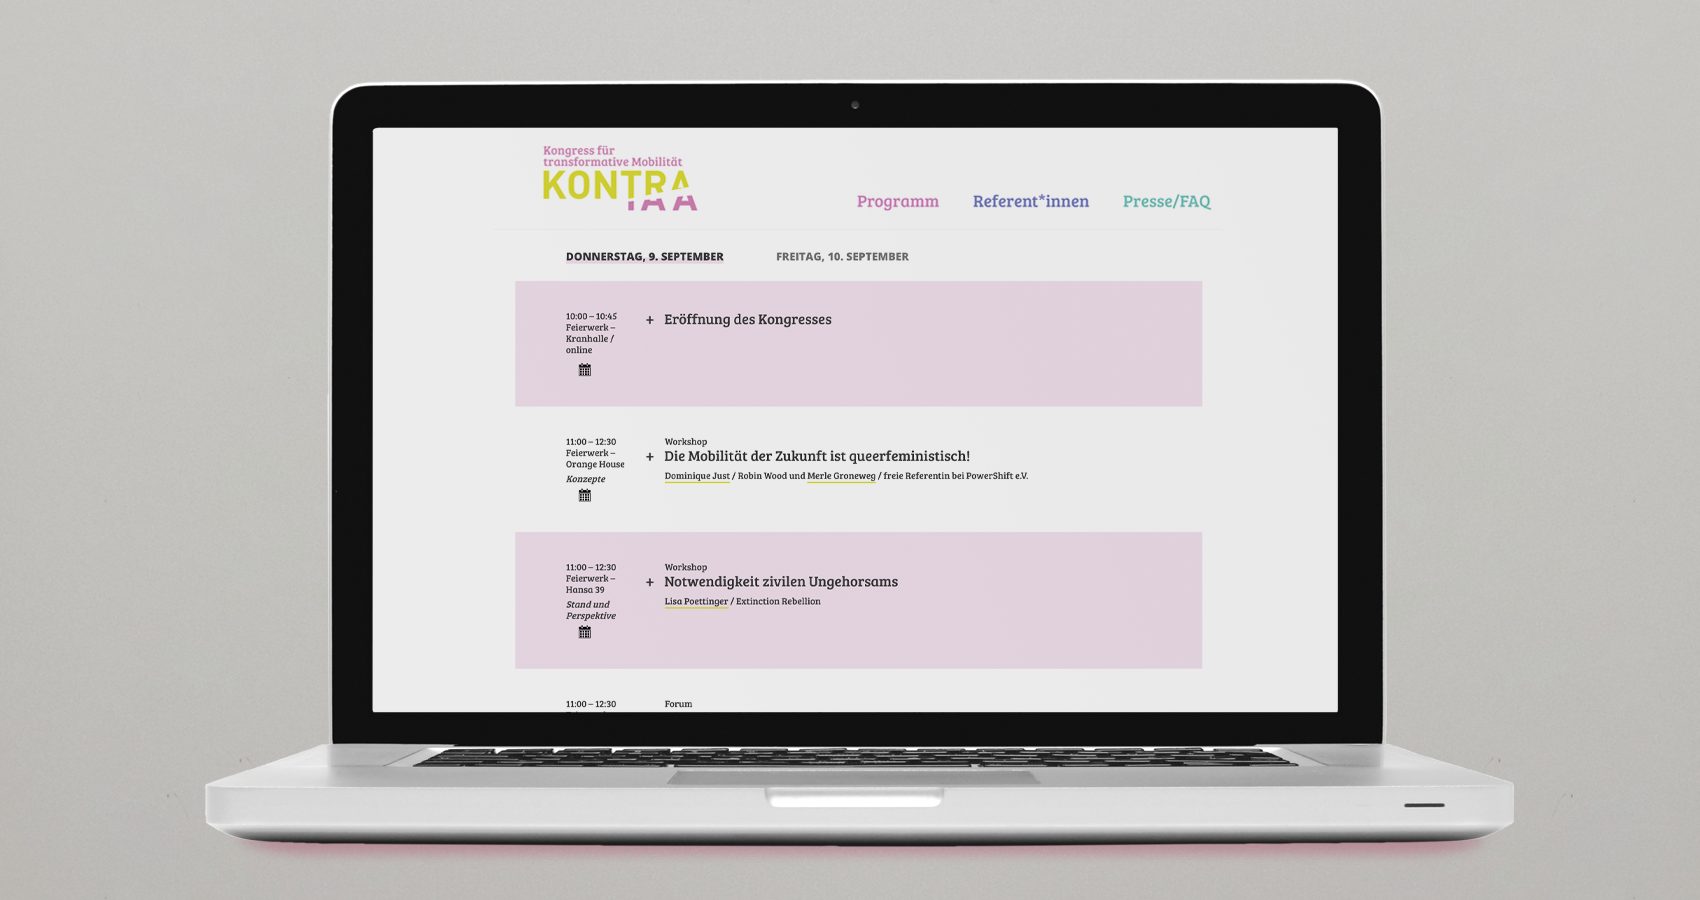 KonTra IAA – Kongress für transformative Mobilität, Screenshot Programm